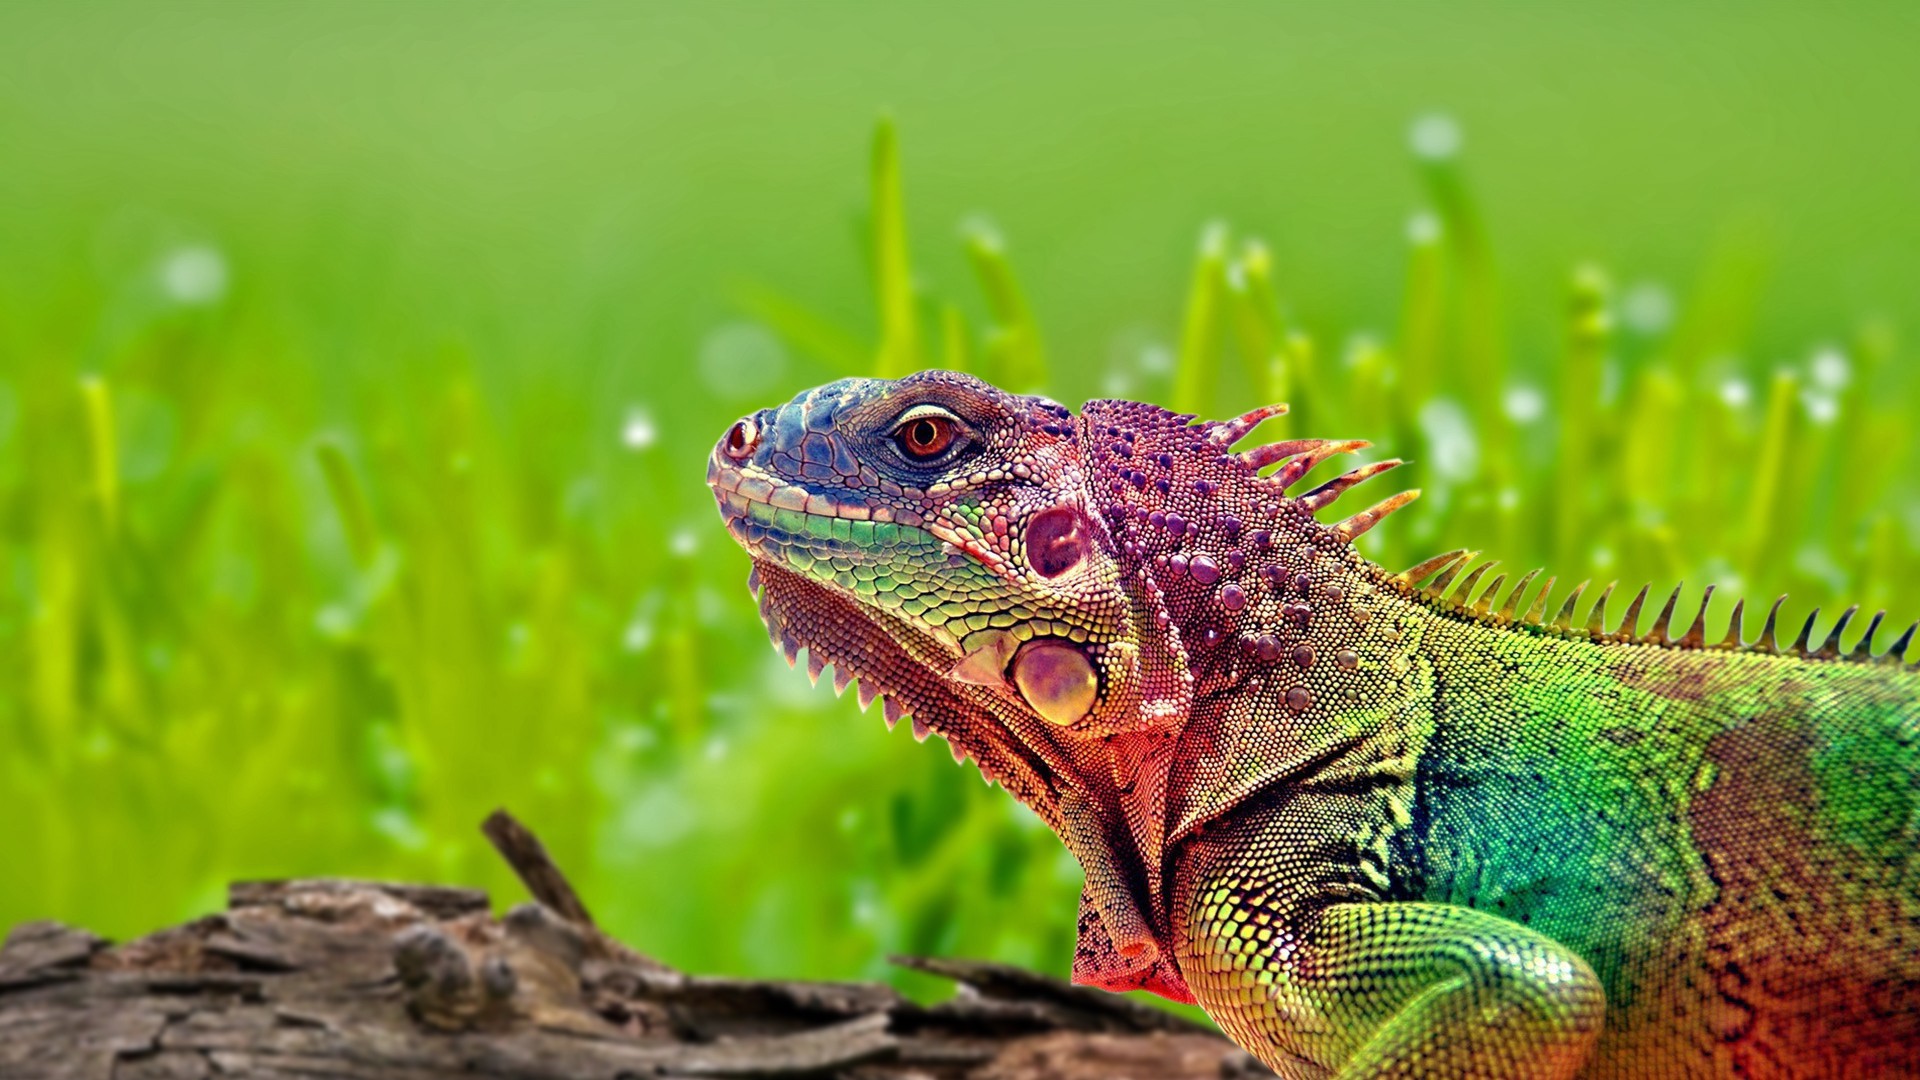 Colorful Lizard Wallpaper | Animals & Birds Wallpapers | Pinterest ...